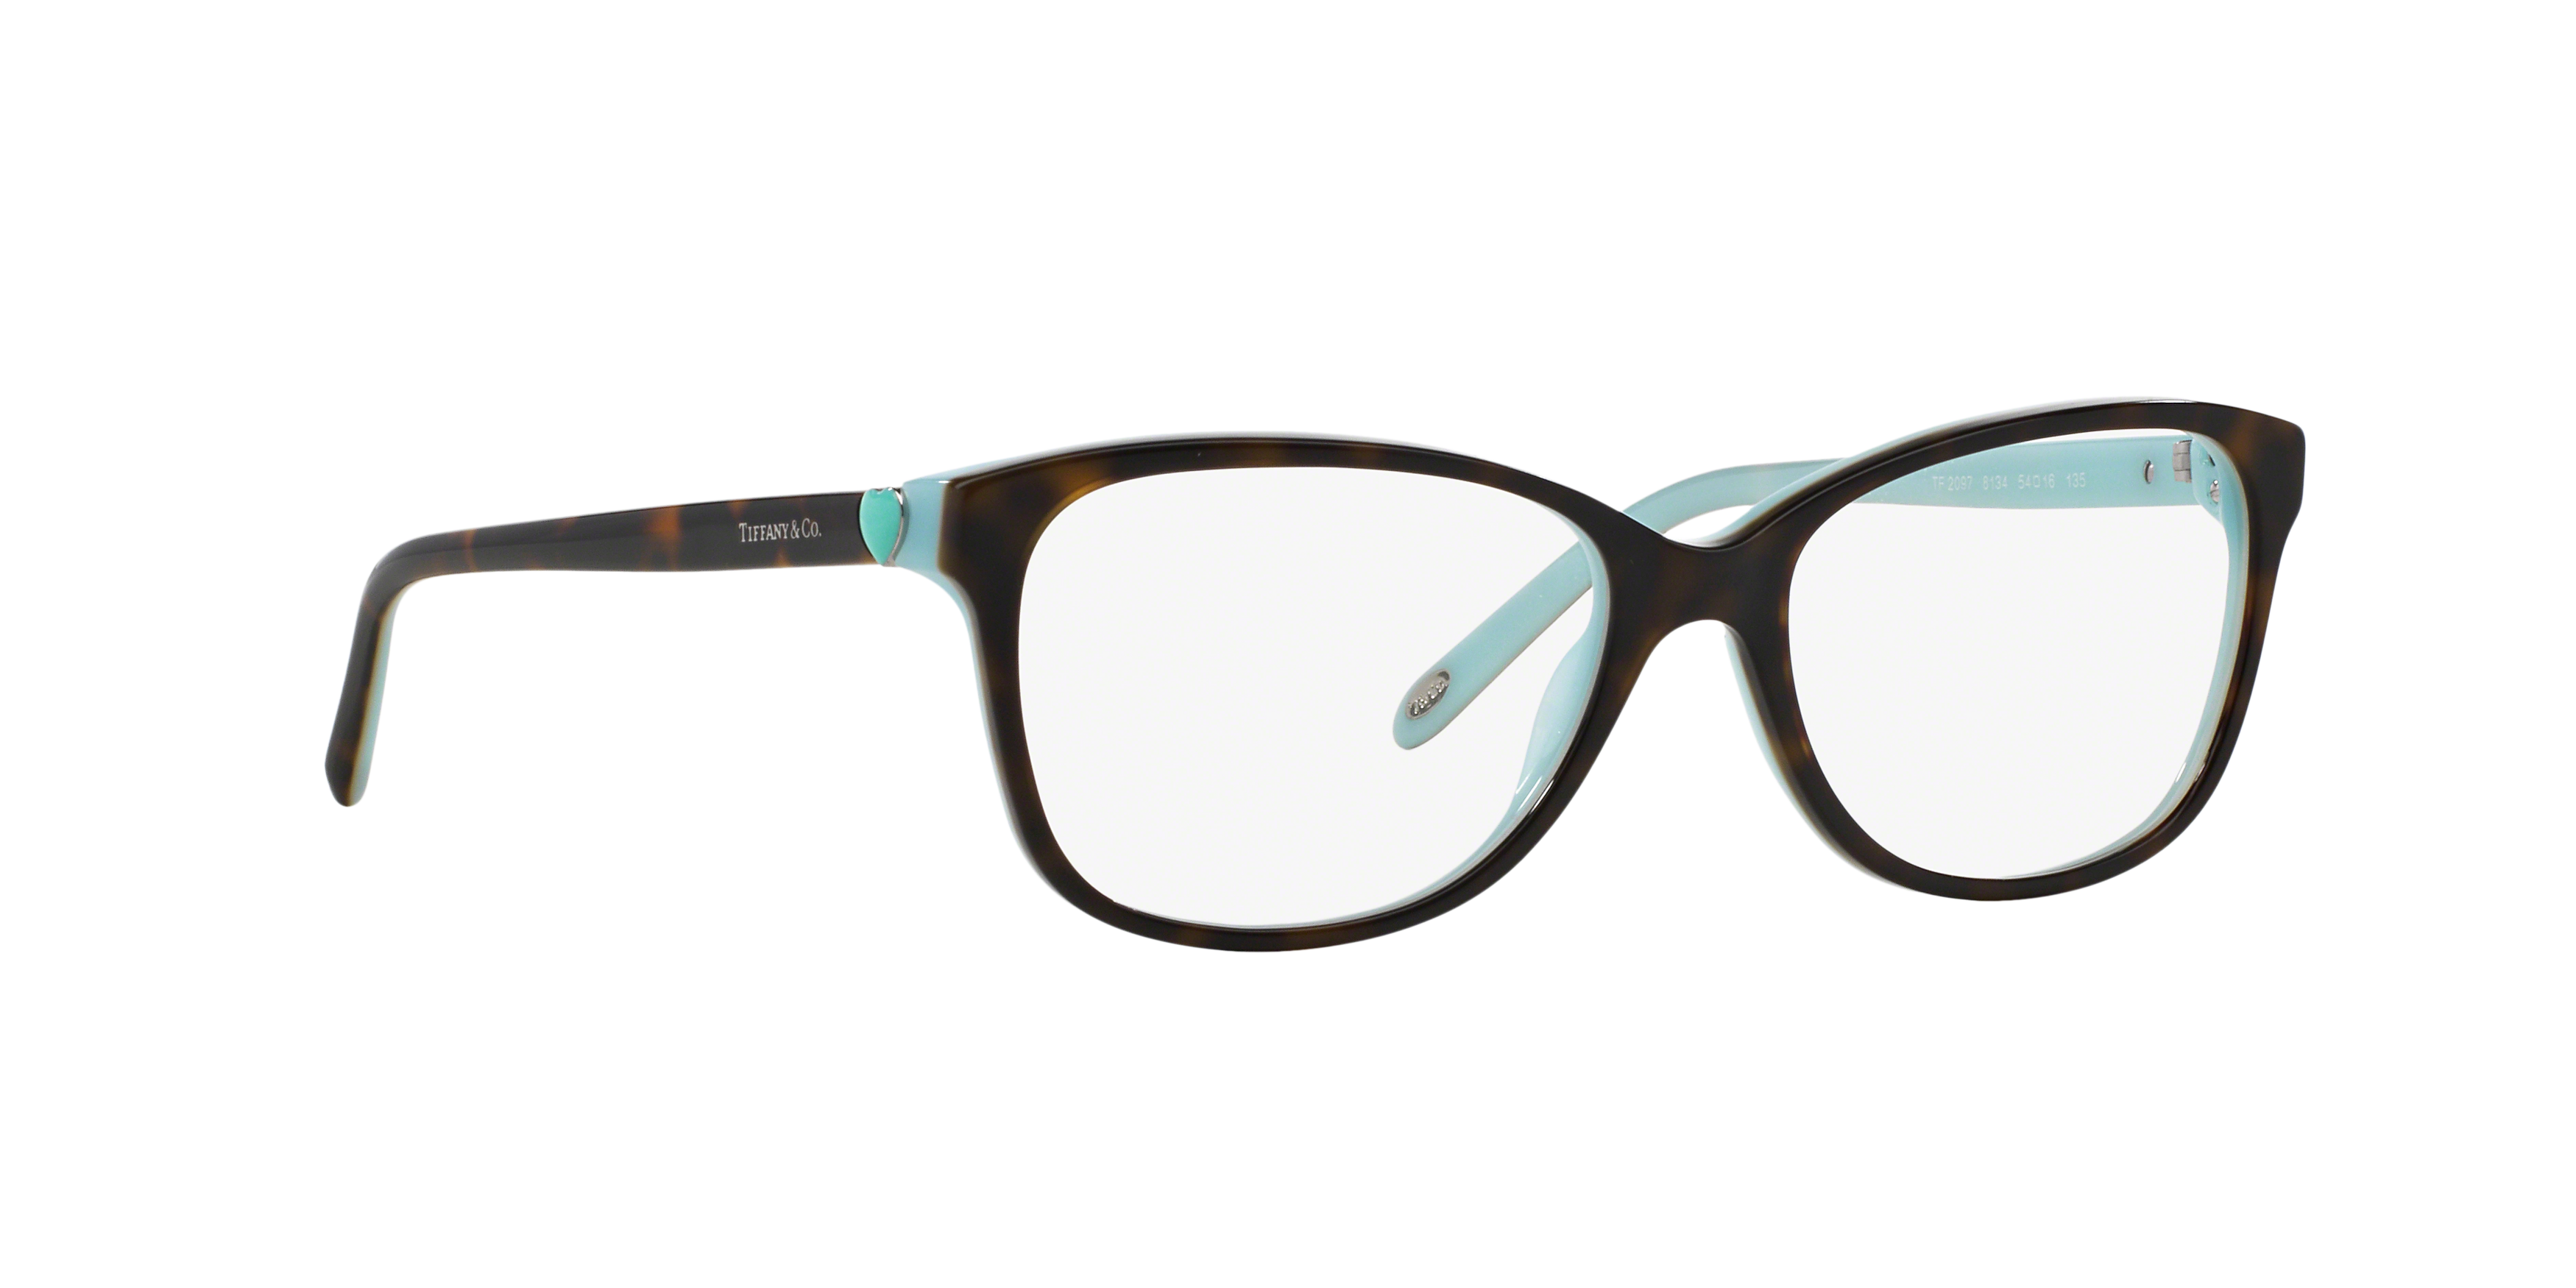 Angle_Right01 Tiffany & Co TF 2097 Glasses Transparent / Tortoise Shell